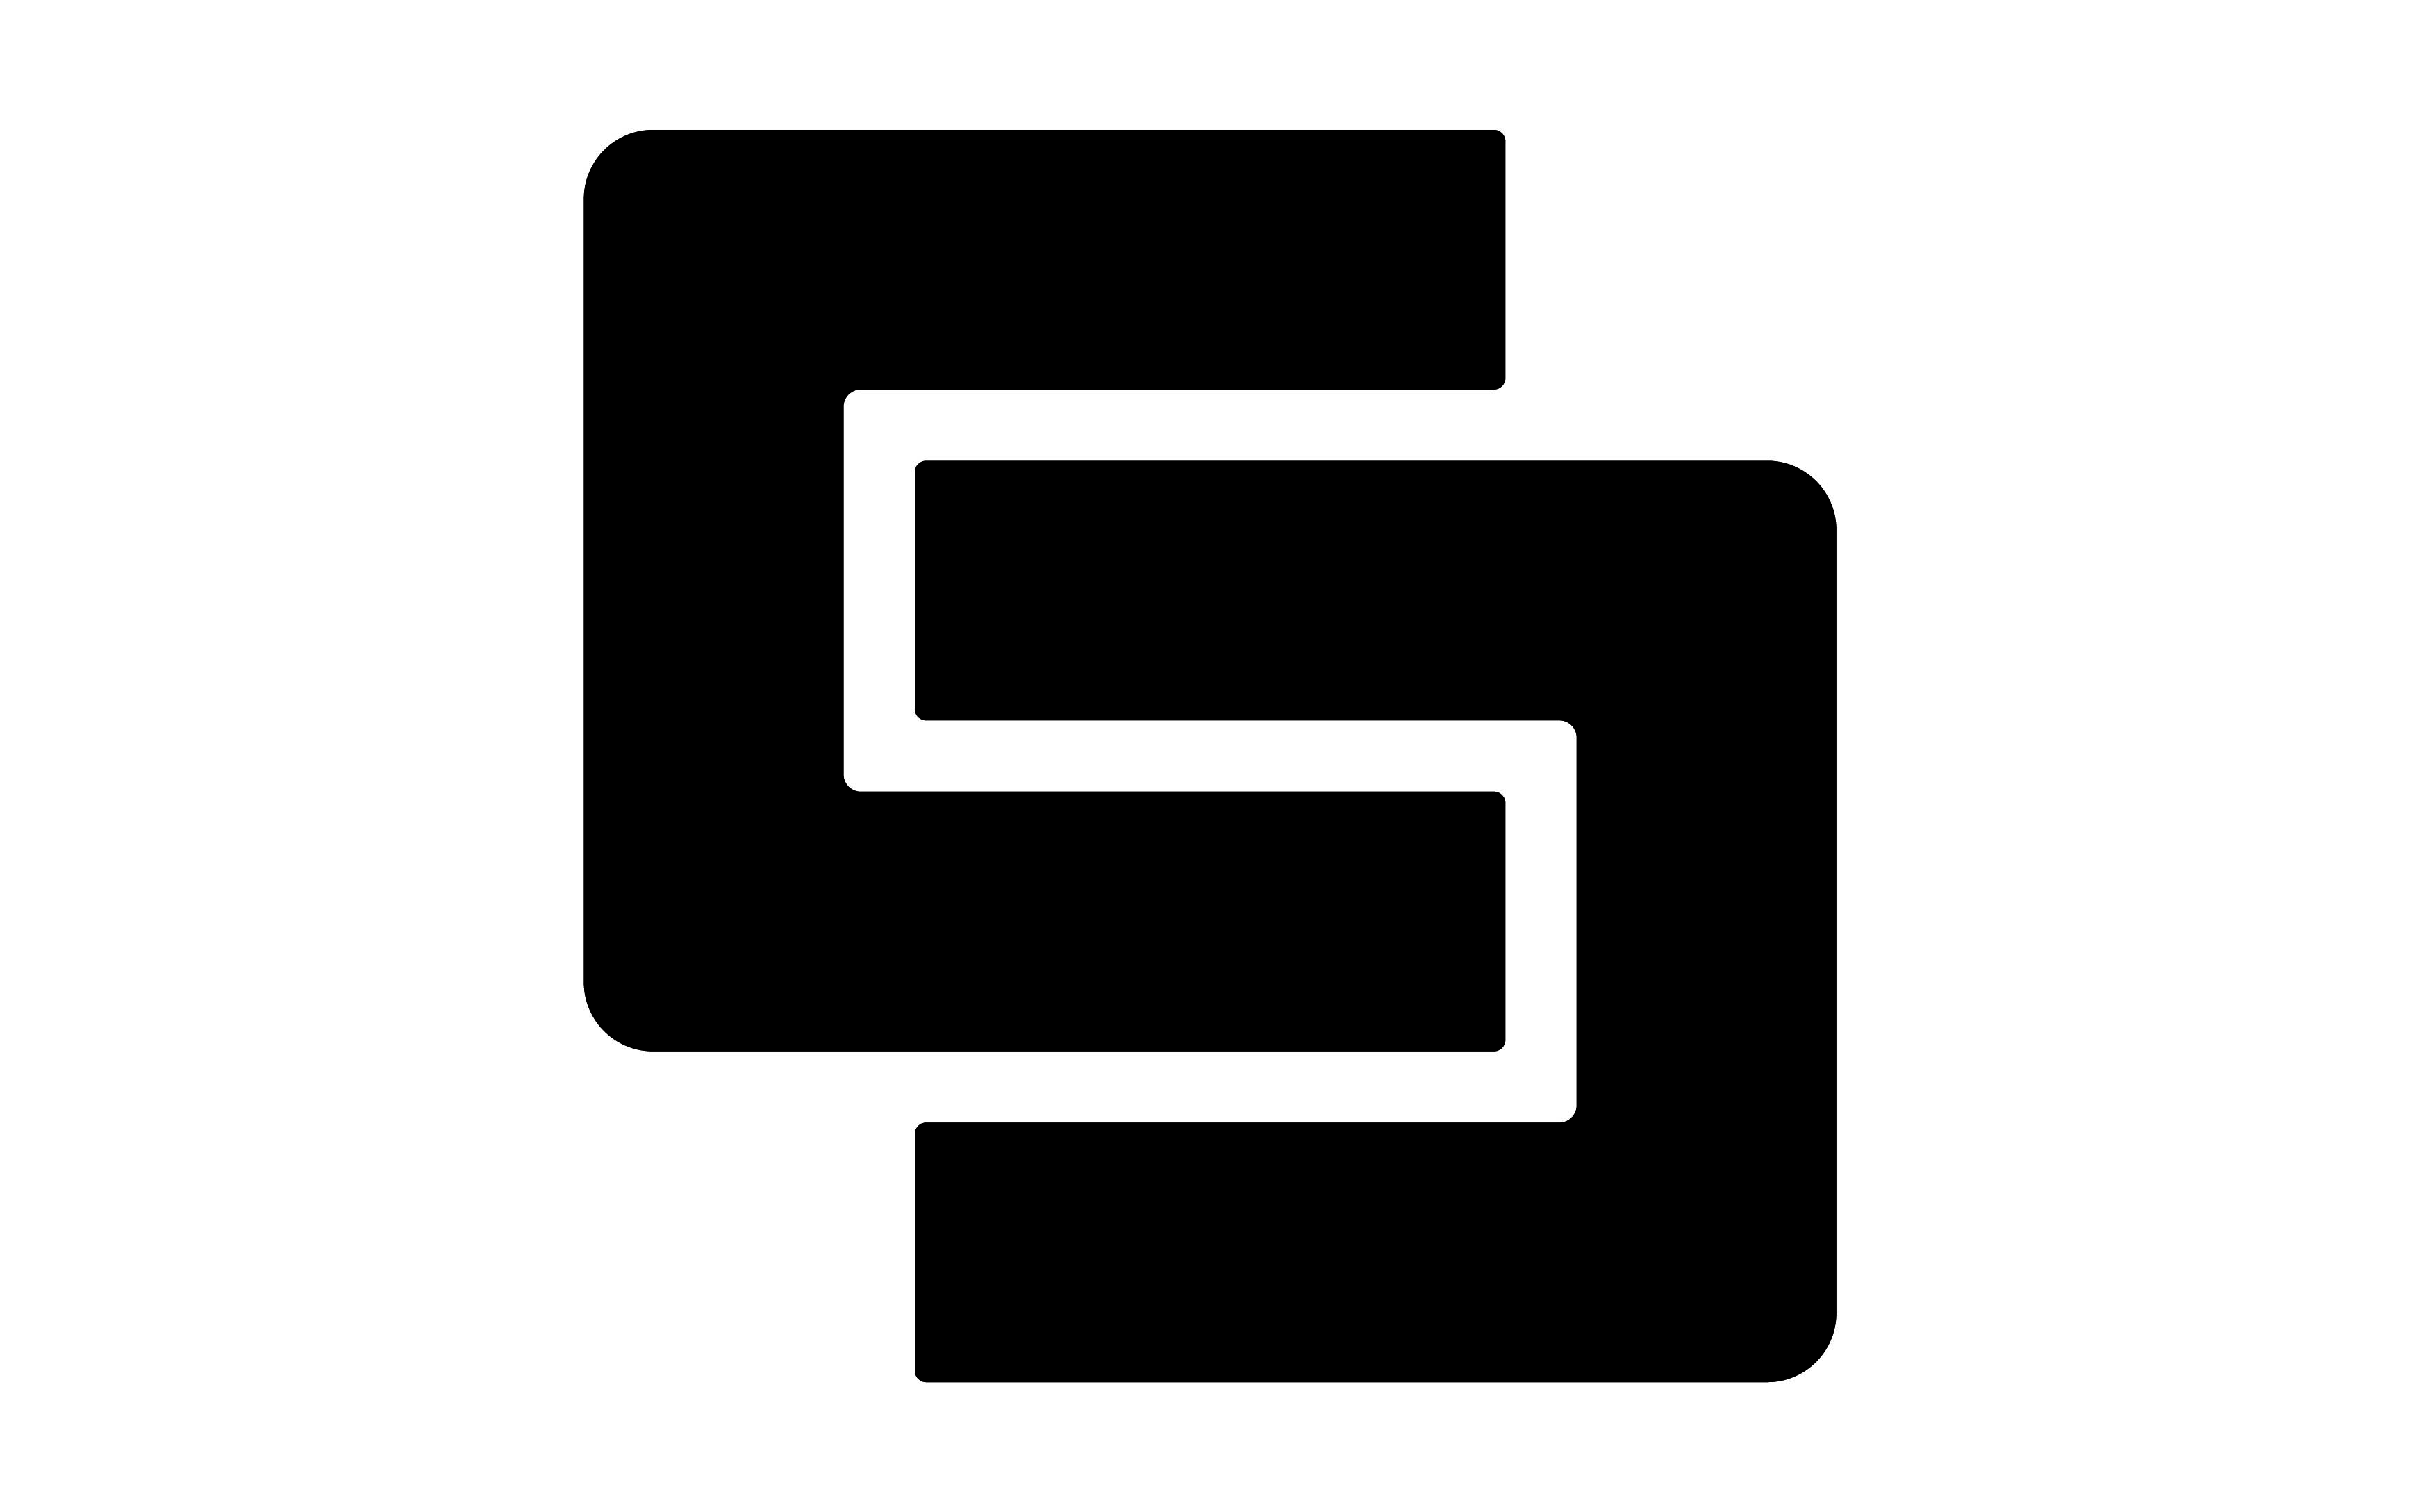 MIT Schwarzman College of Computing logo, which has two black interlocking graphics that create an S.